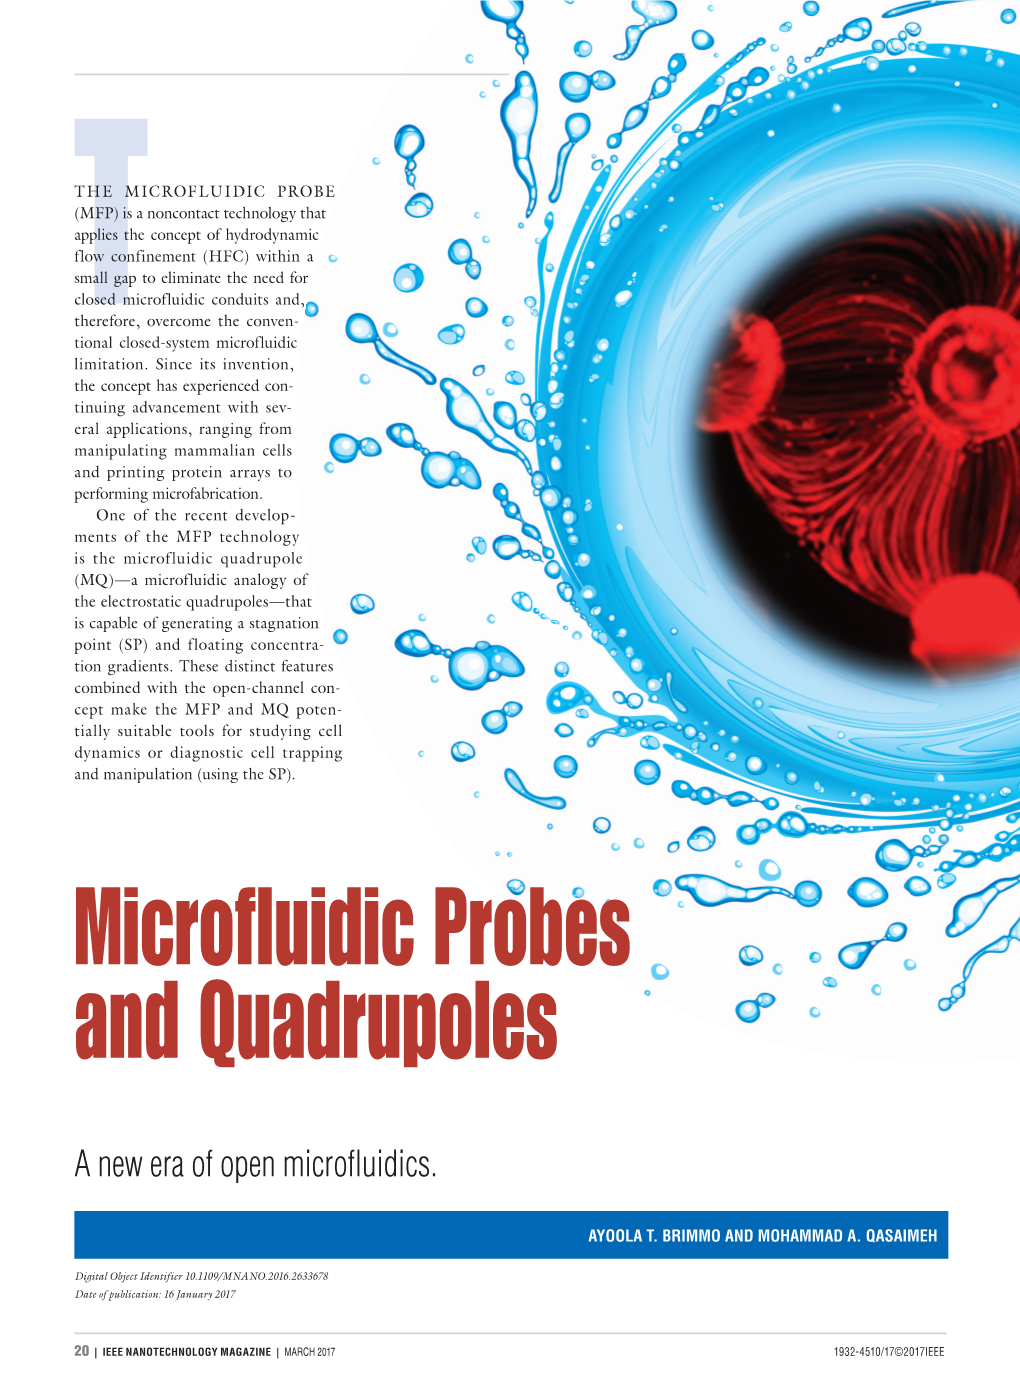 Microfluidic Probes and Quadrupoles